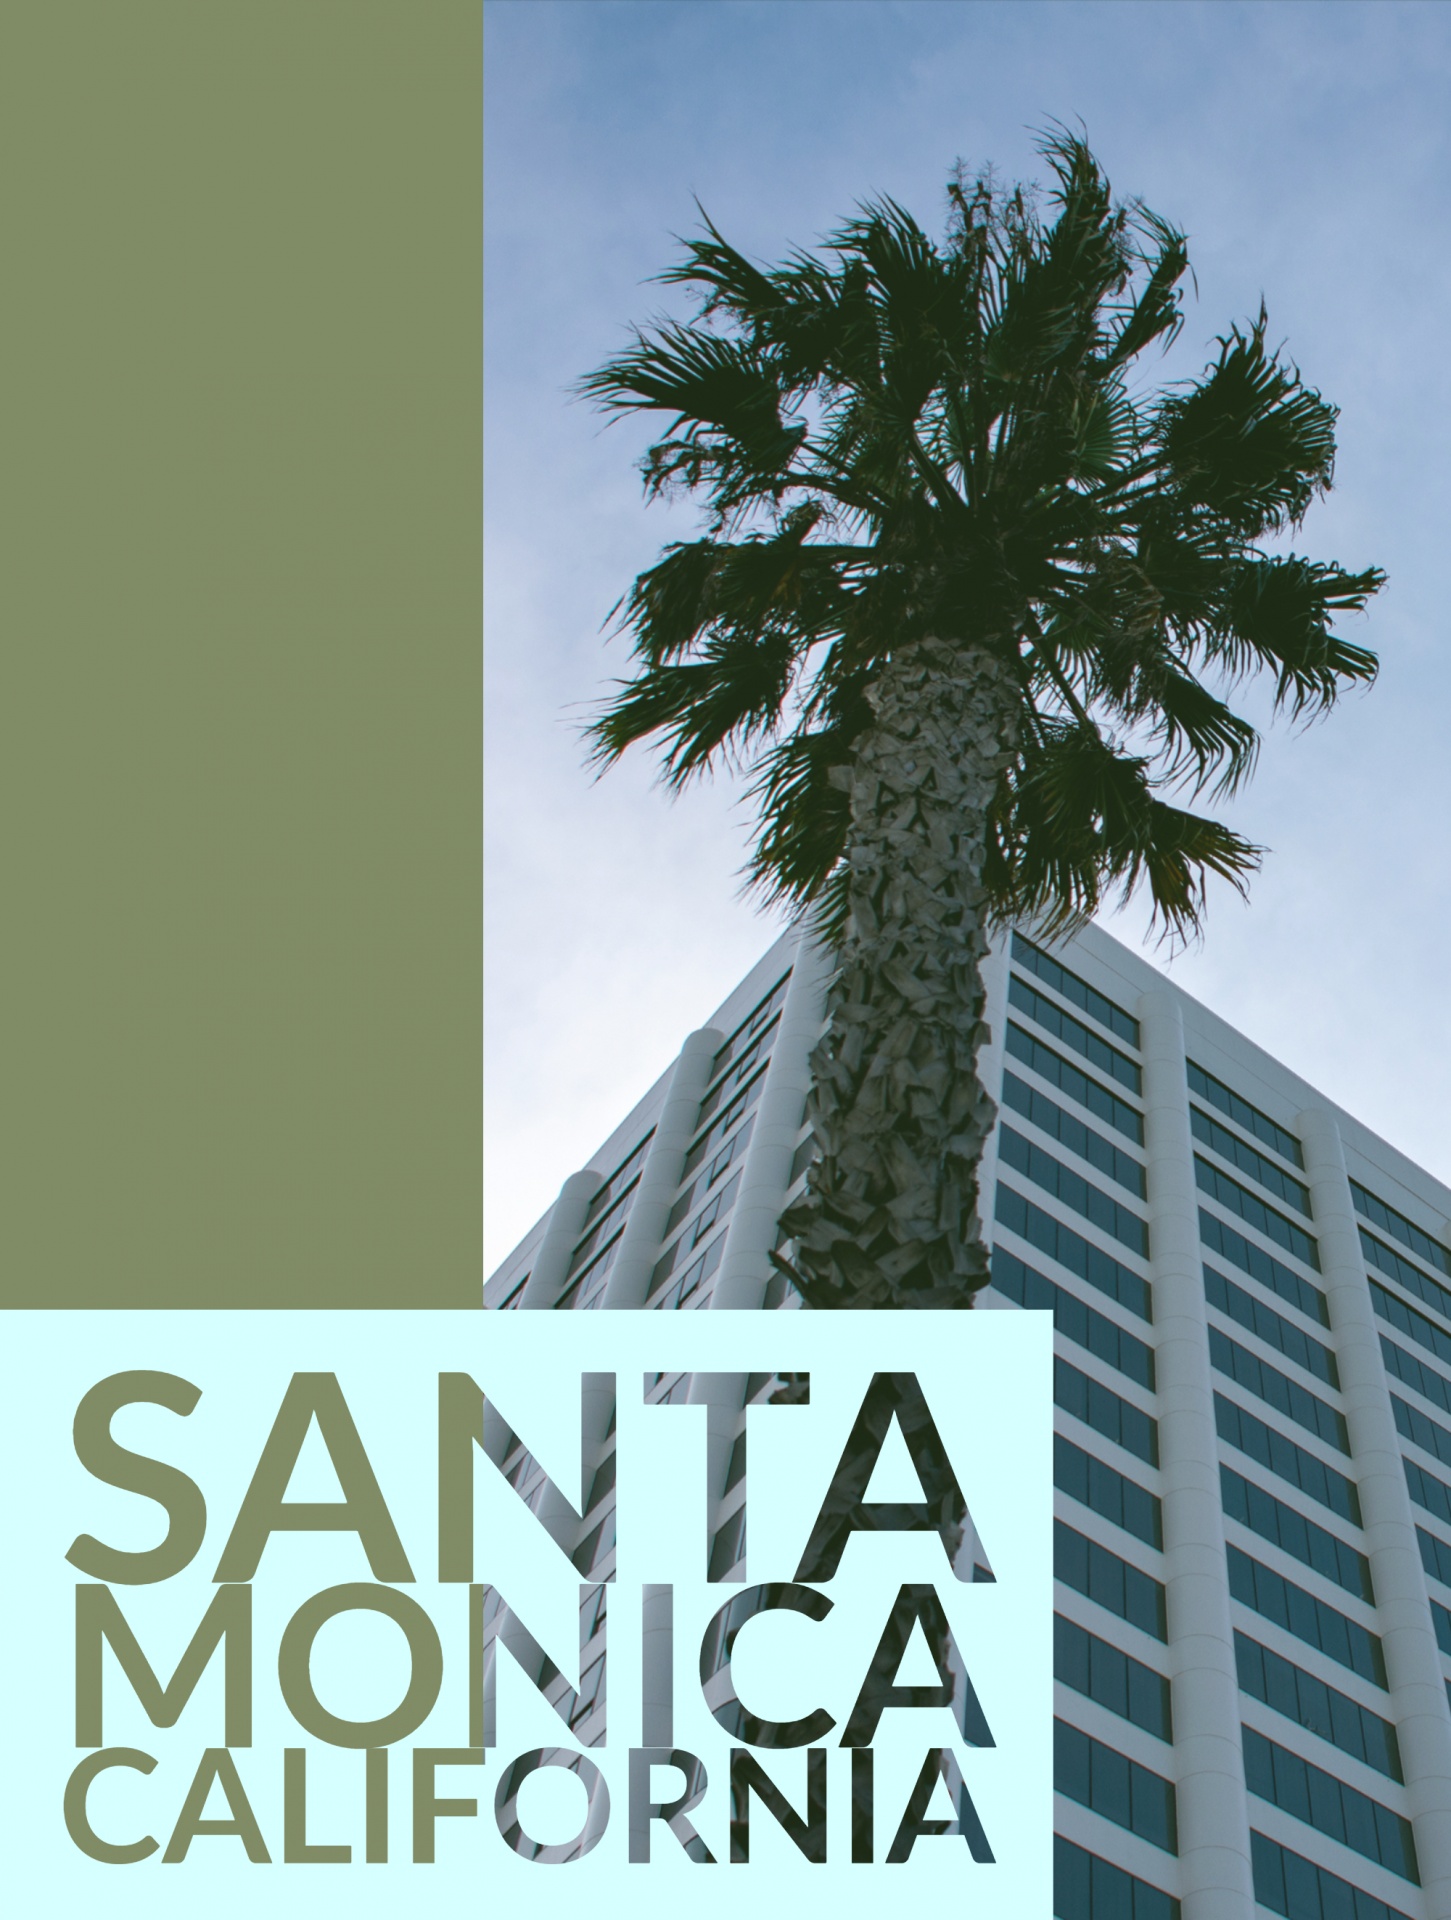 Cartel de viaje de Santa Mónica